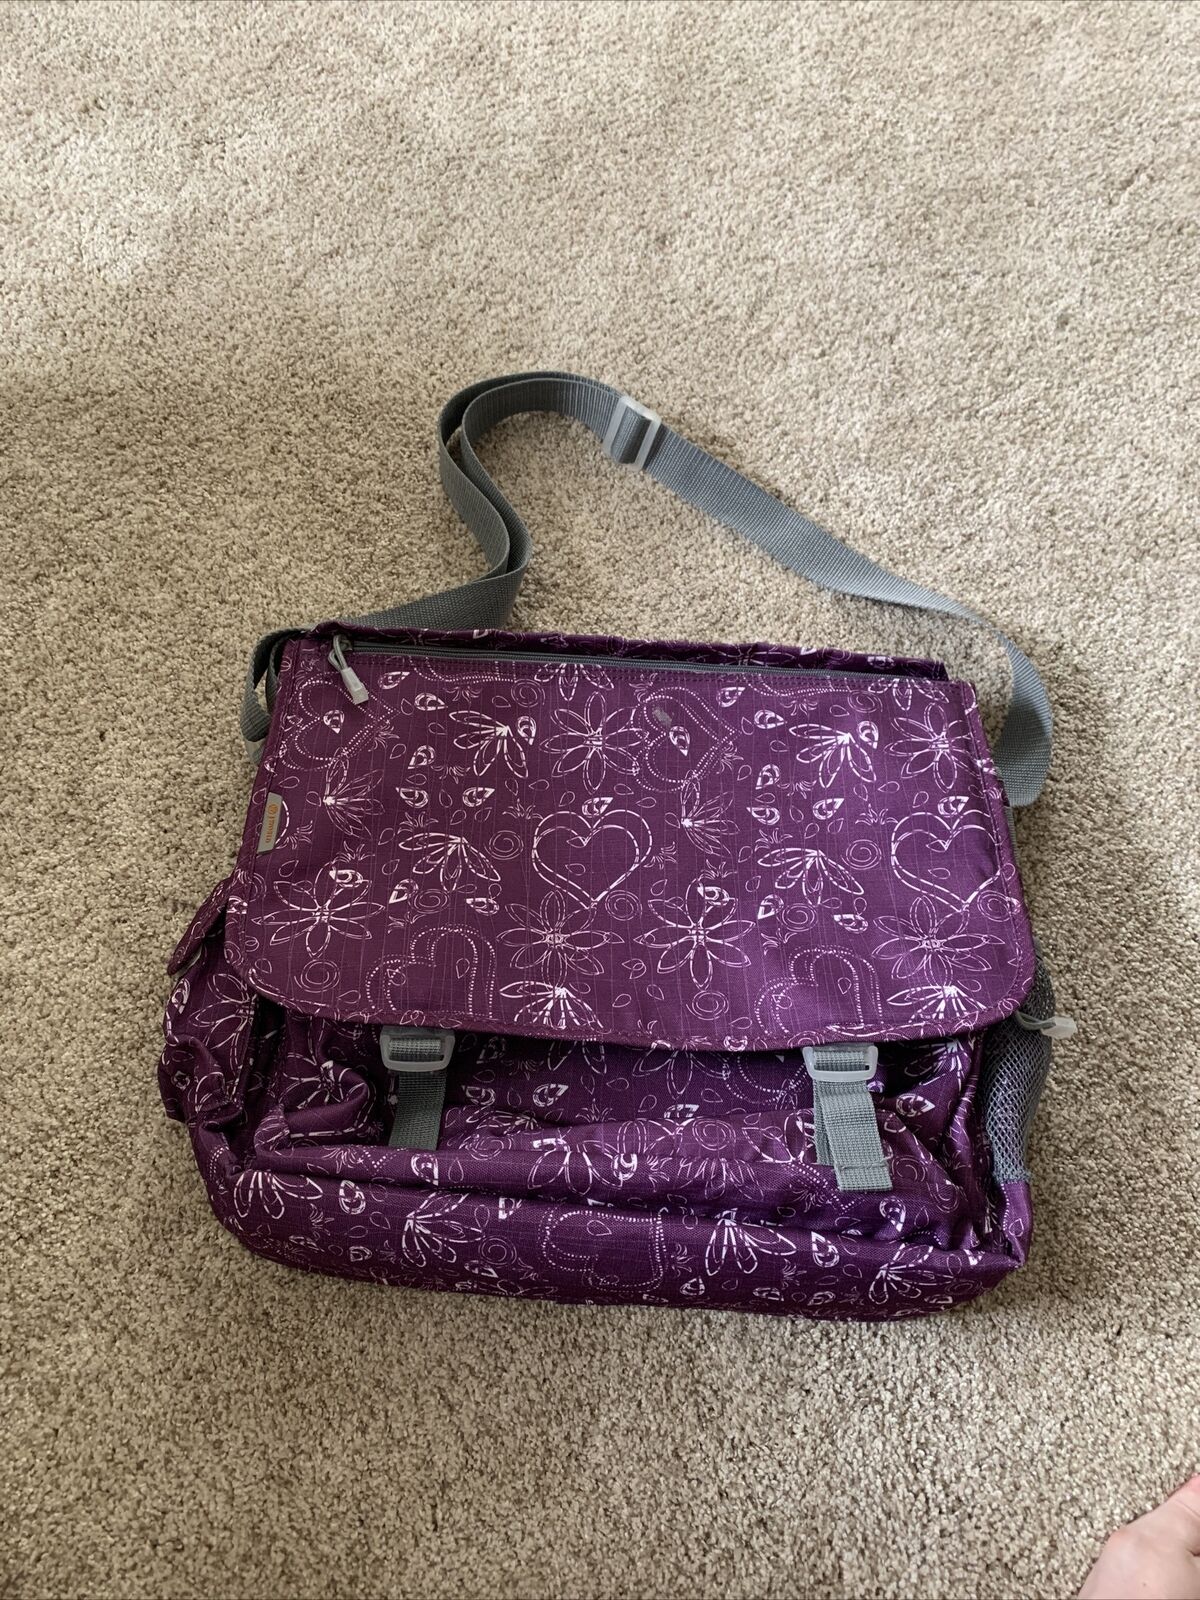 NWOT J World Messenger Bag Purple White Floral Heart Print Laptop Travel Bag